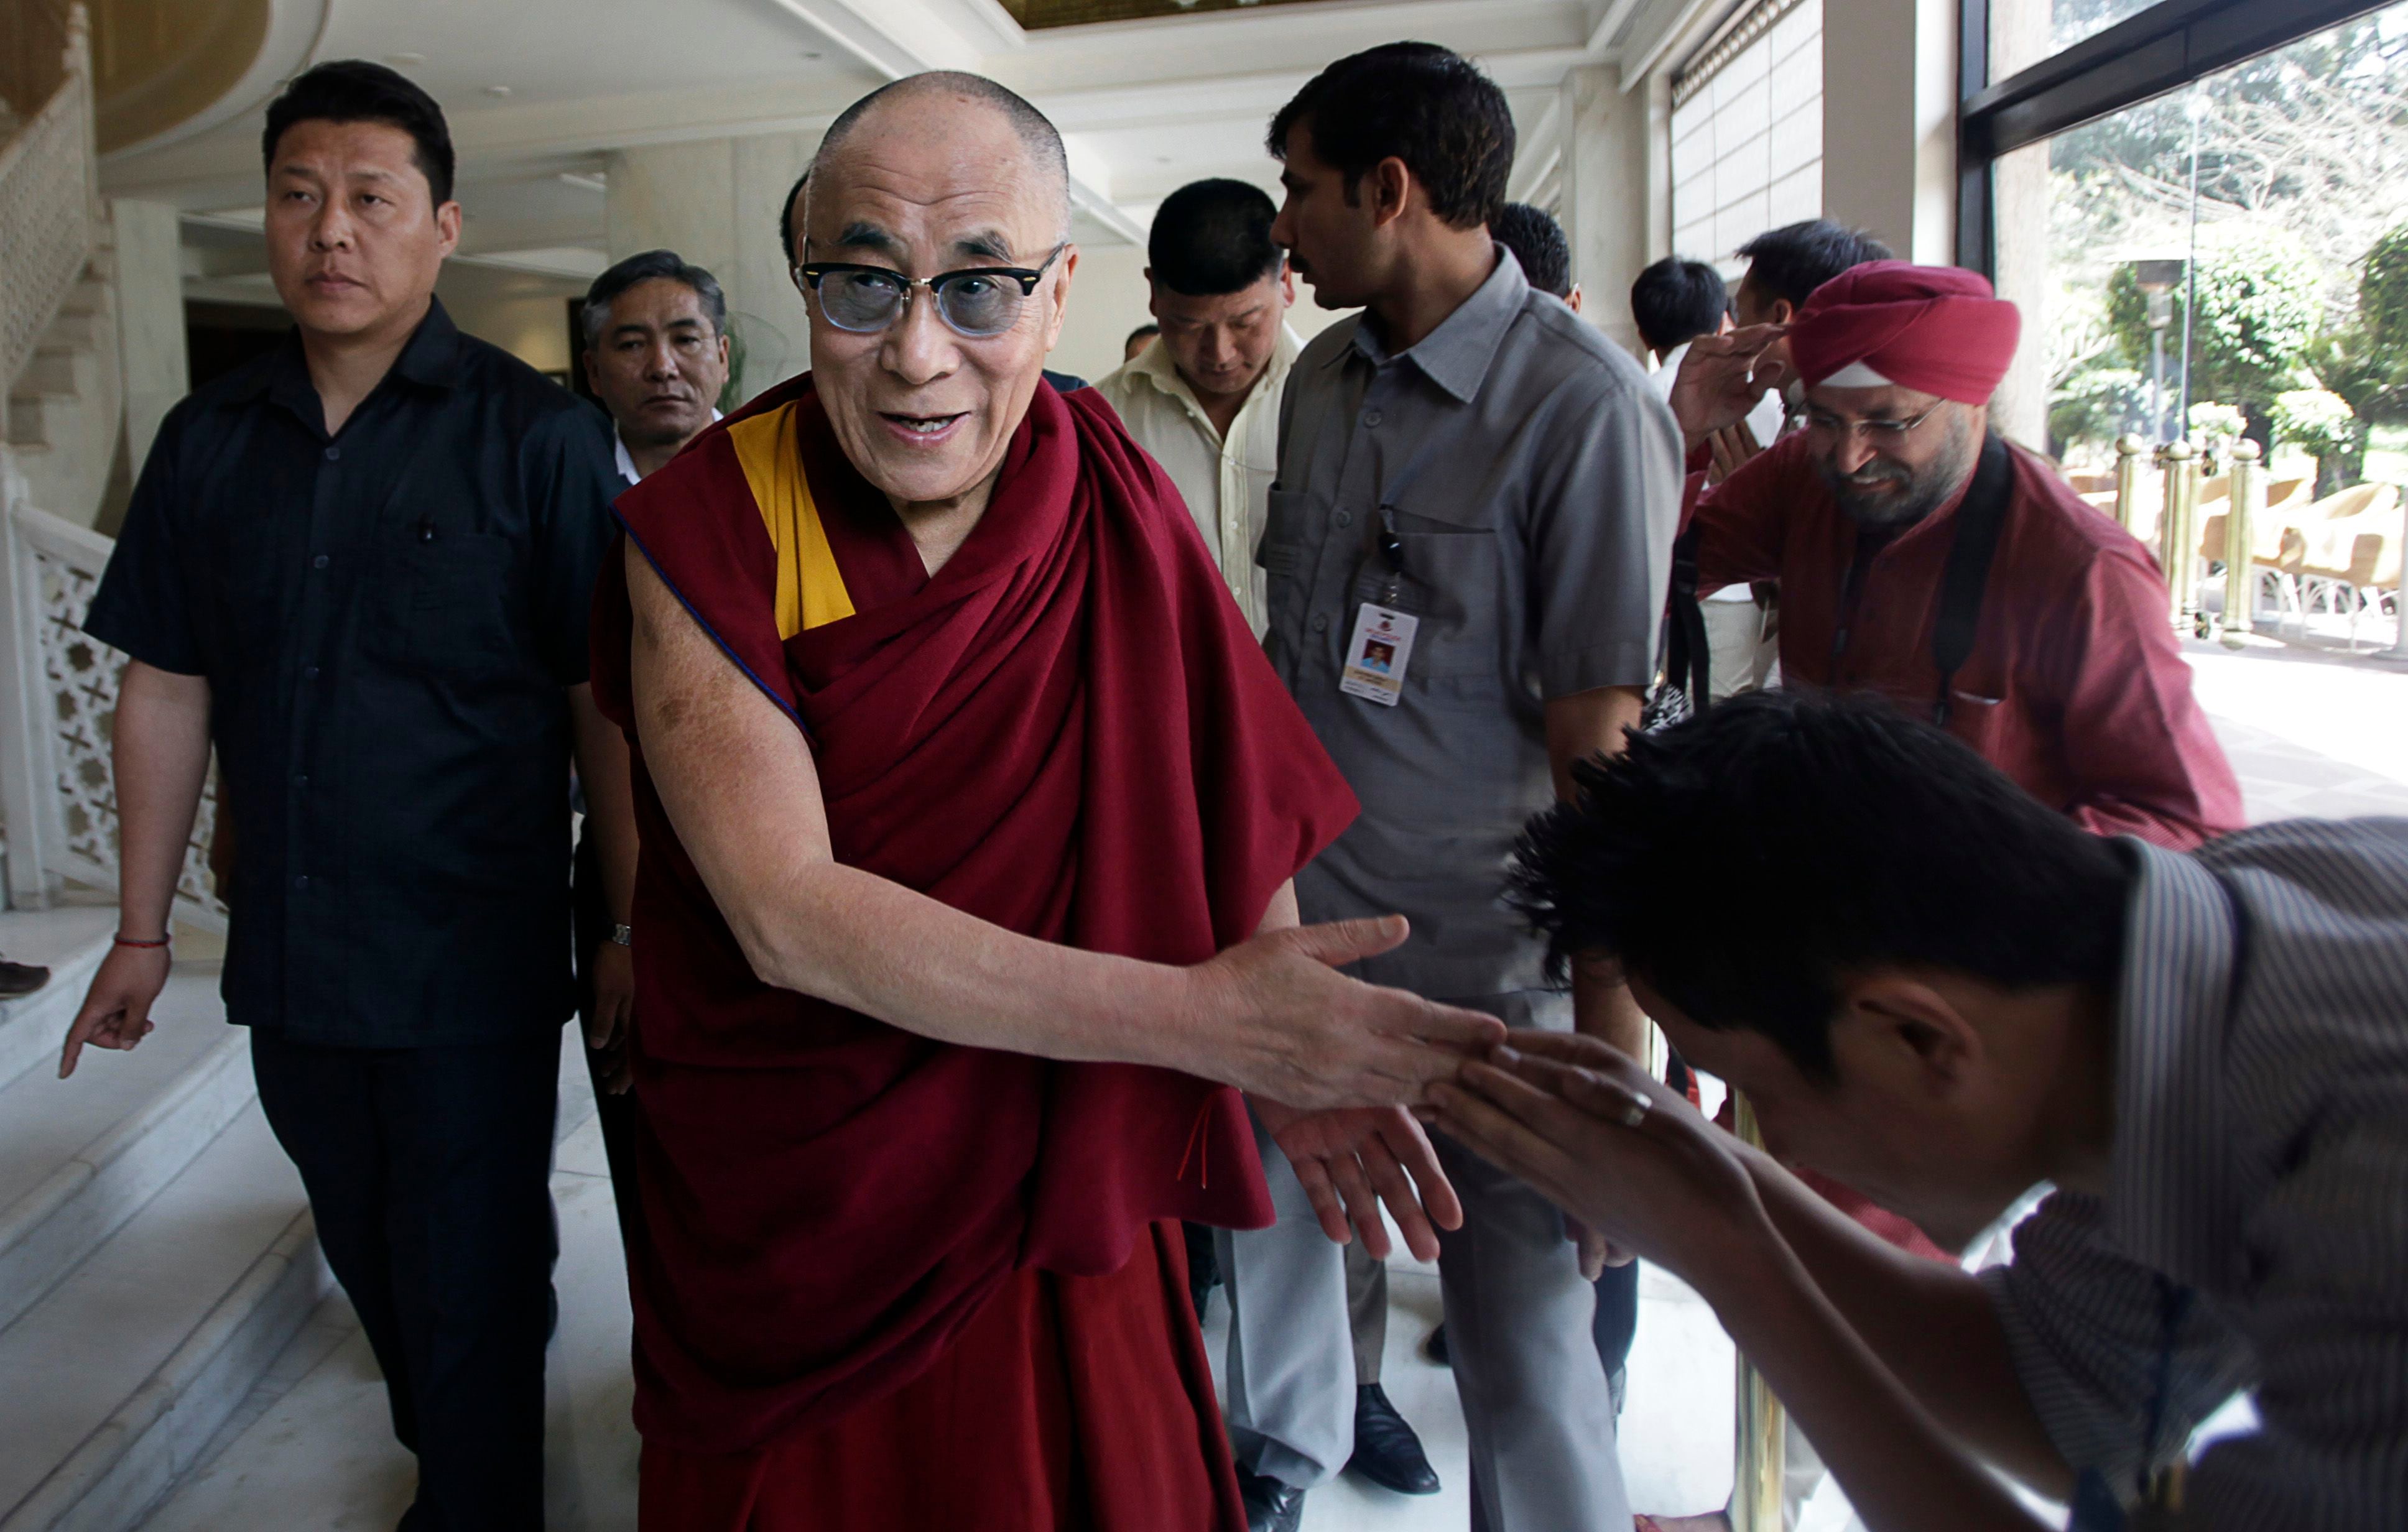 Tibetan spiritual leader the Dalai Lama greets a waiting Tibetan, on his way to deliver spiritual teachings to a gathering, in New Delhi, India, Friday, March 23, 2012.  (AP Photo/ Manish Swarup)